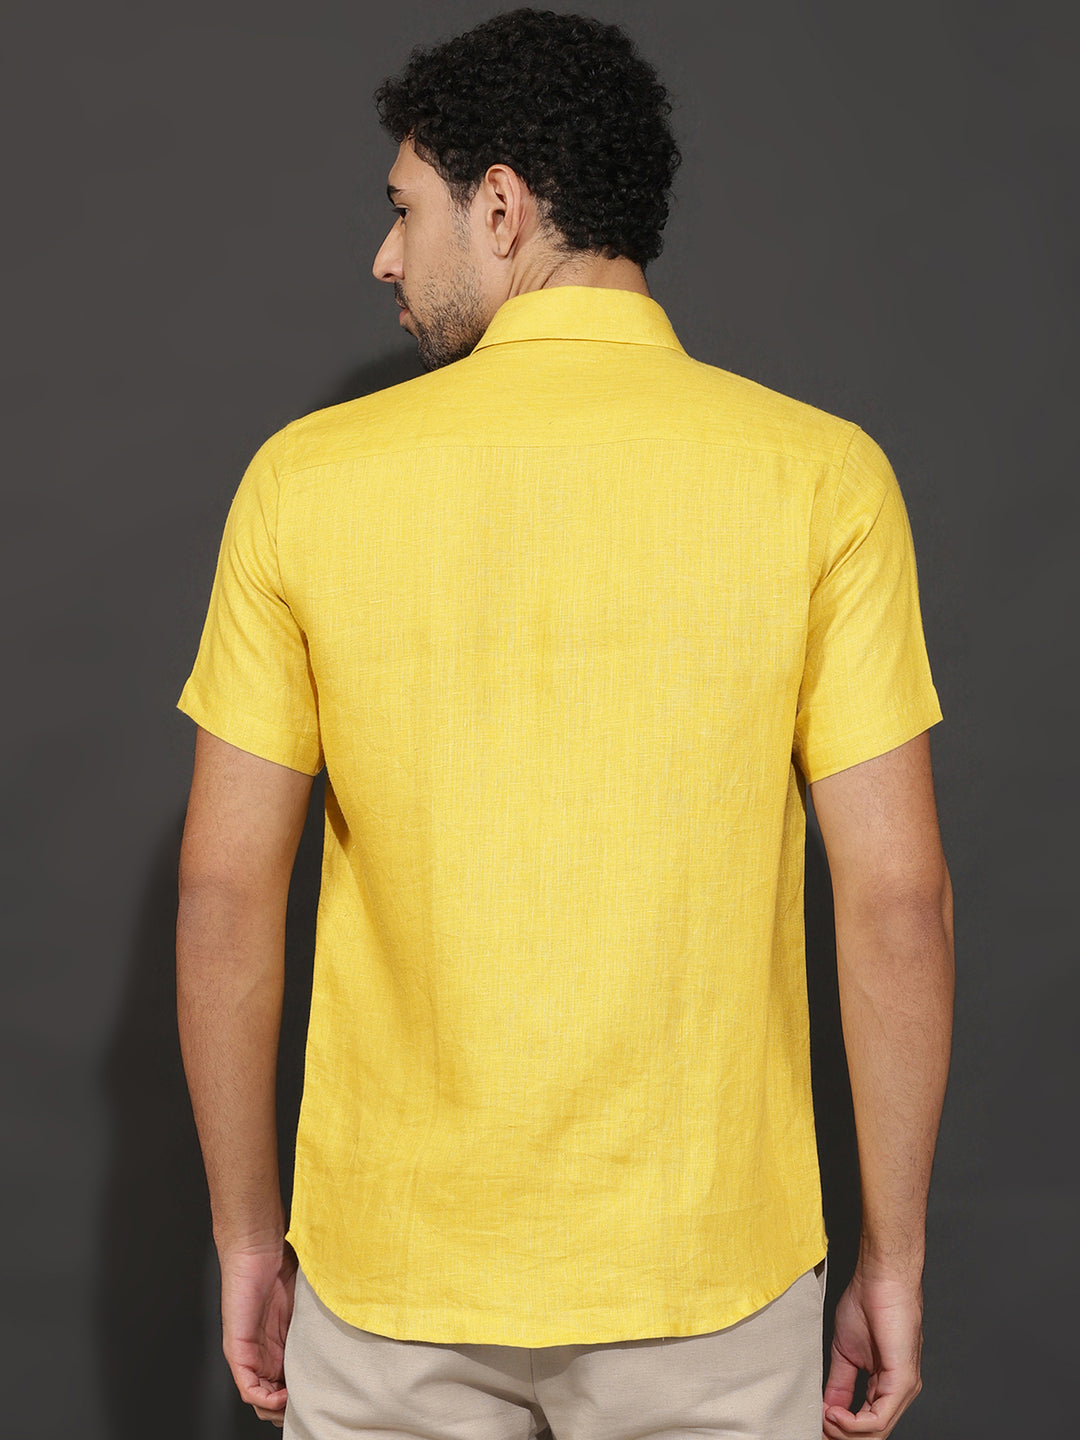 Harvey - Pure Linen Half Sleeve Shirt - Sunburst Yellow